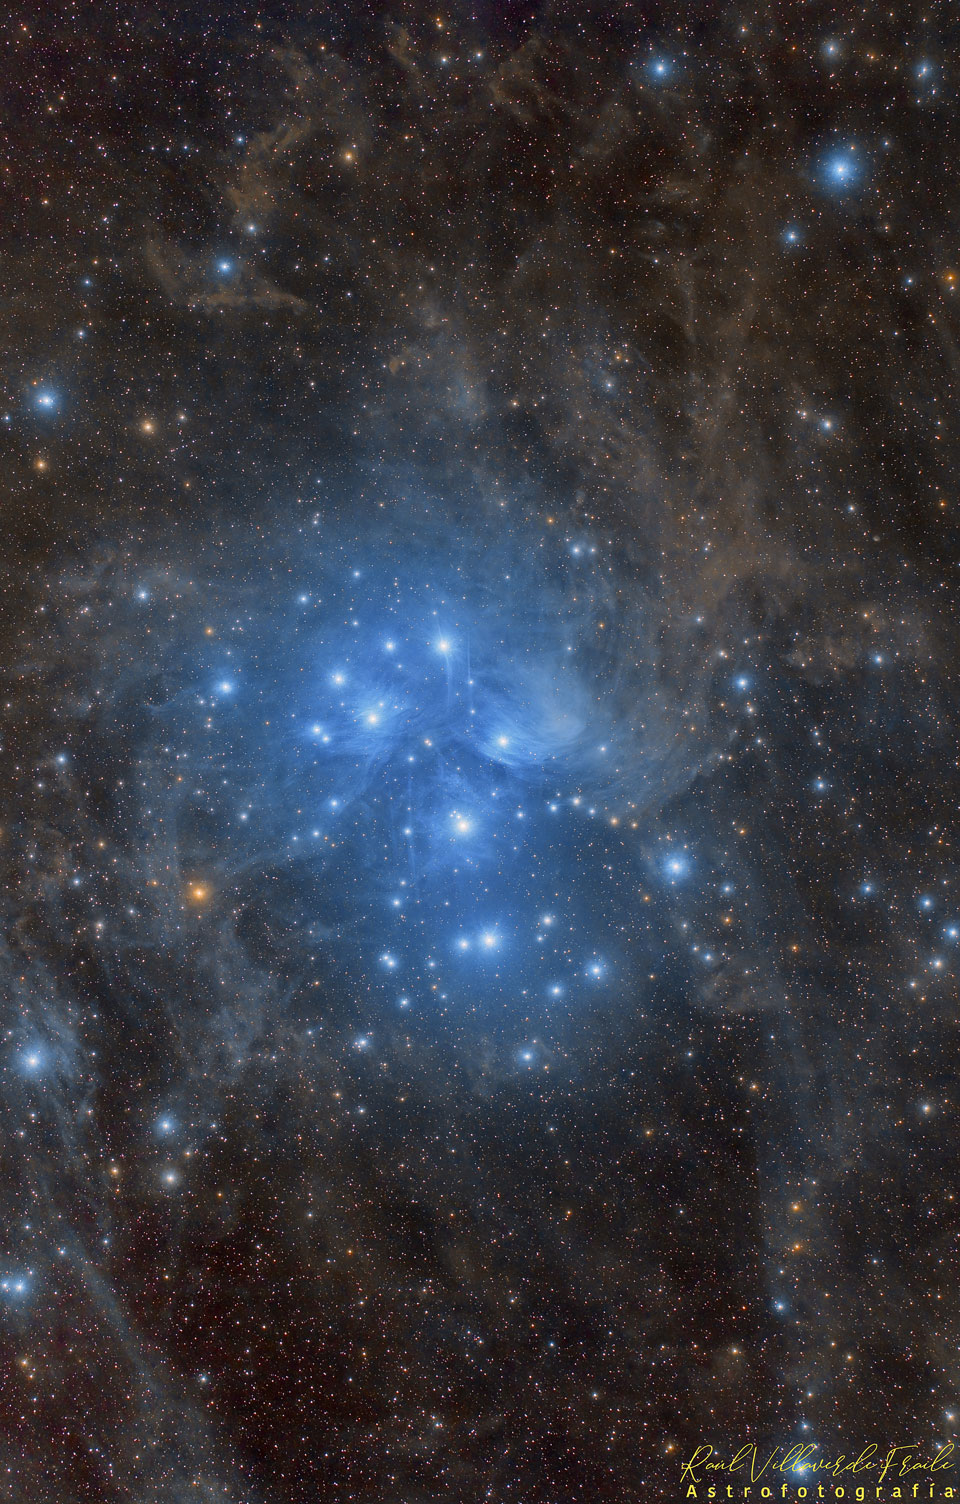 200909 Pleiades The Seven Sisters Star Cluster Raul Villarverde Fraile 1 Günün Astronomi Görseli (APOD/NASA) | 09/09/20